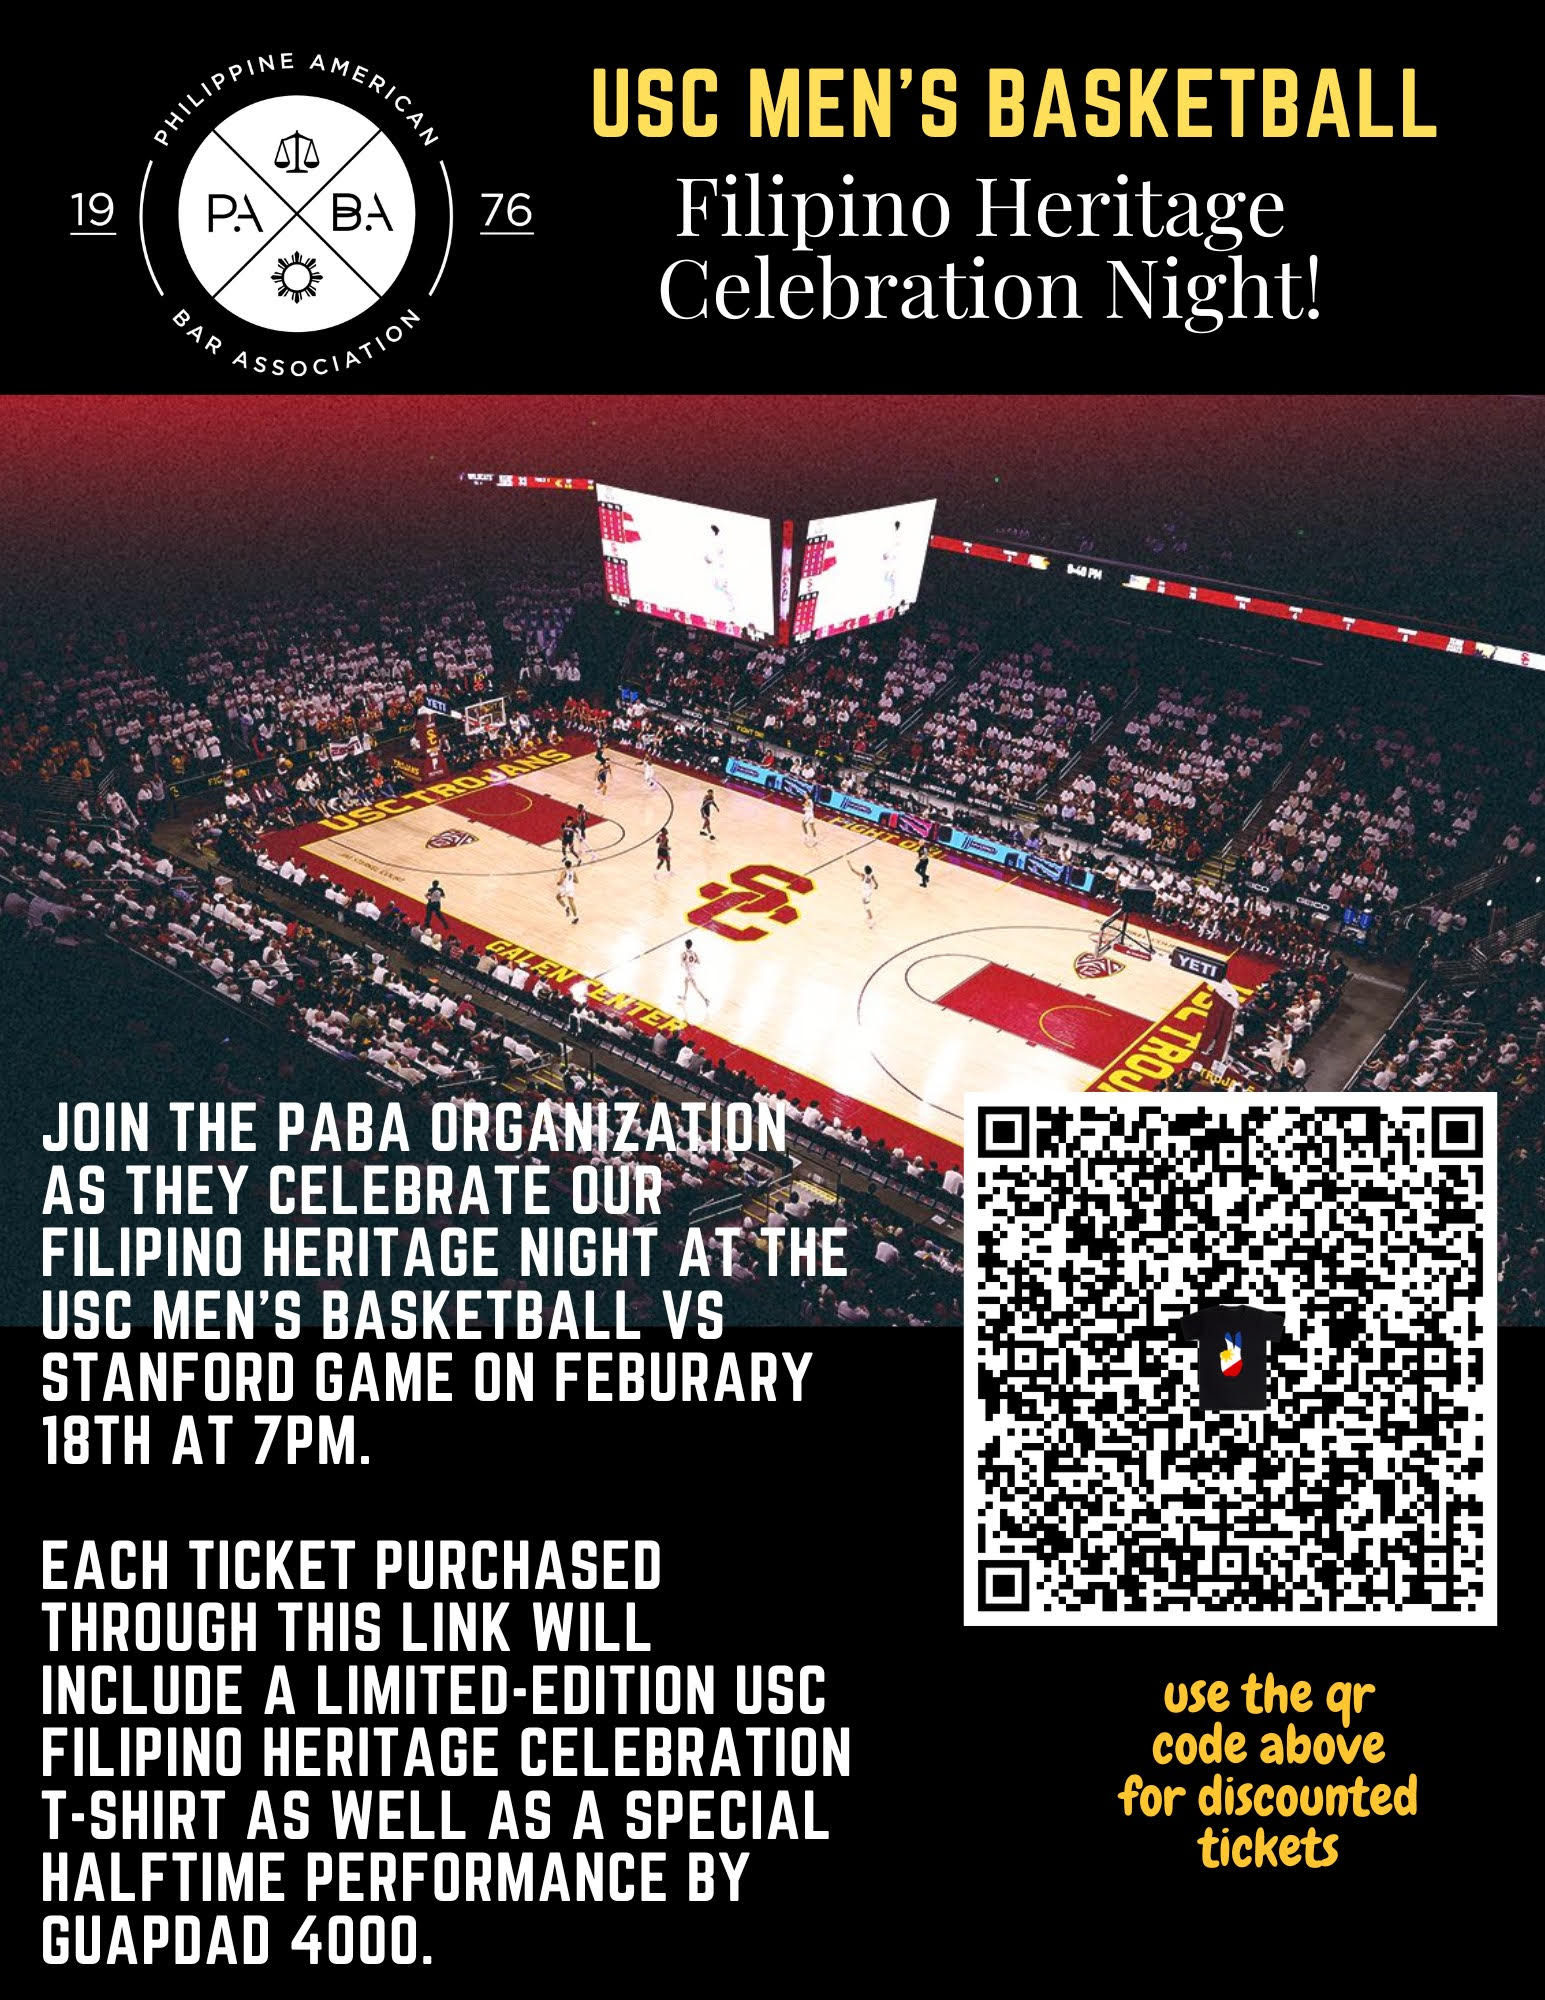 Celebrate Filipino Heritage Night with USC Men’s Basketball!